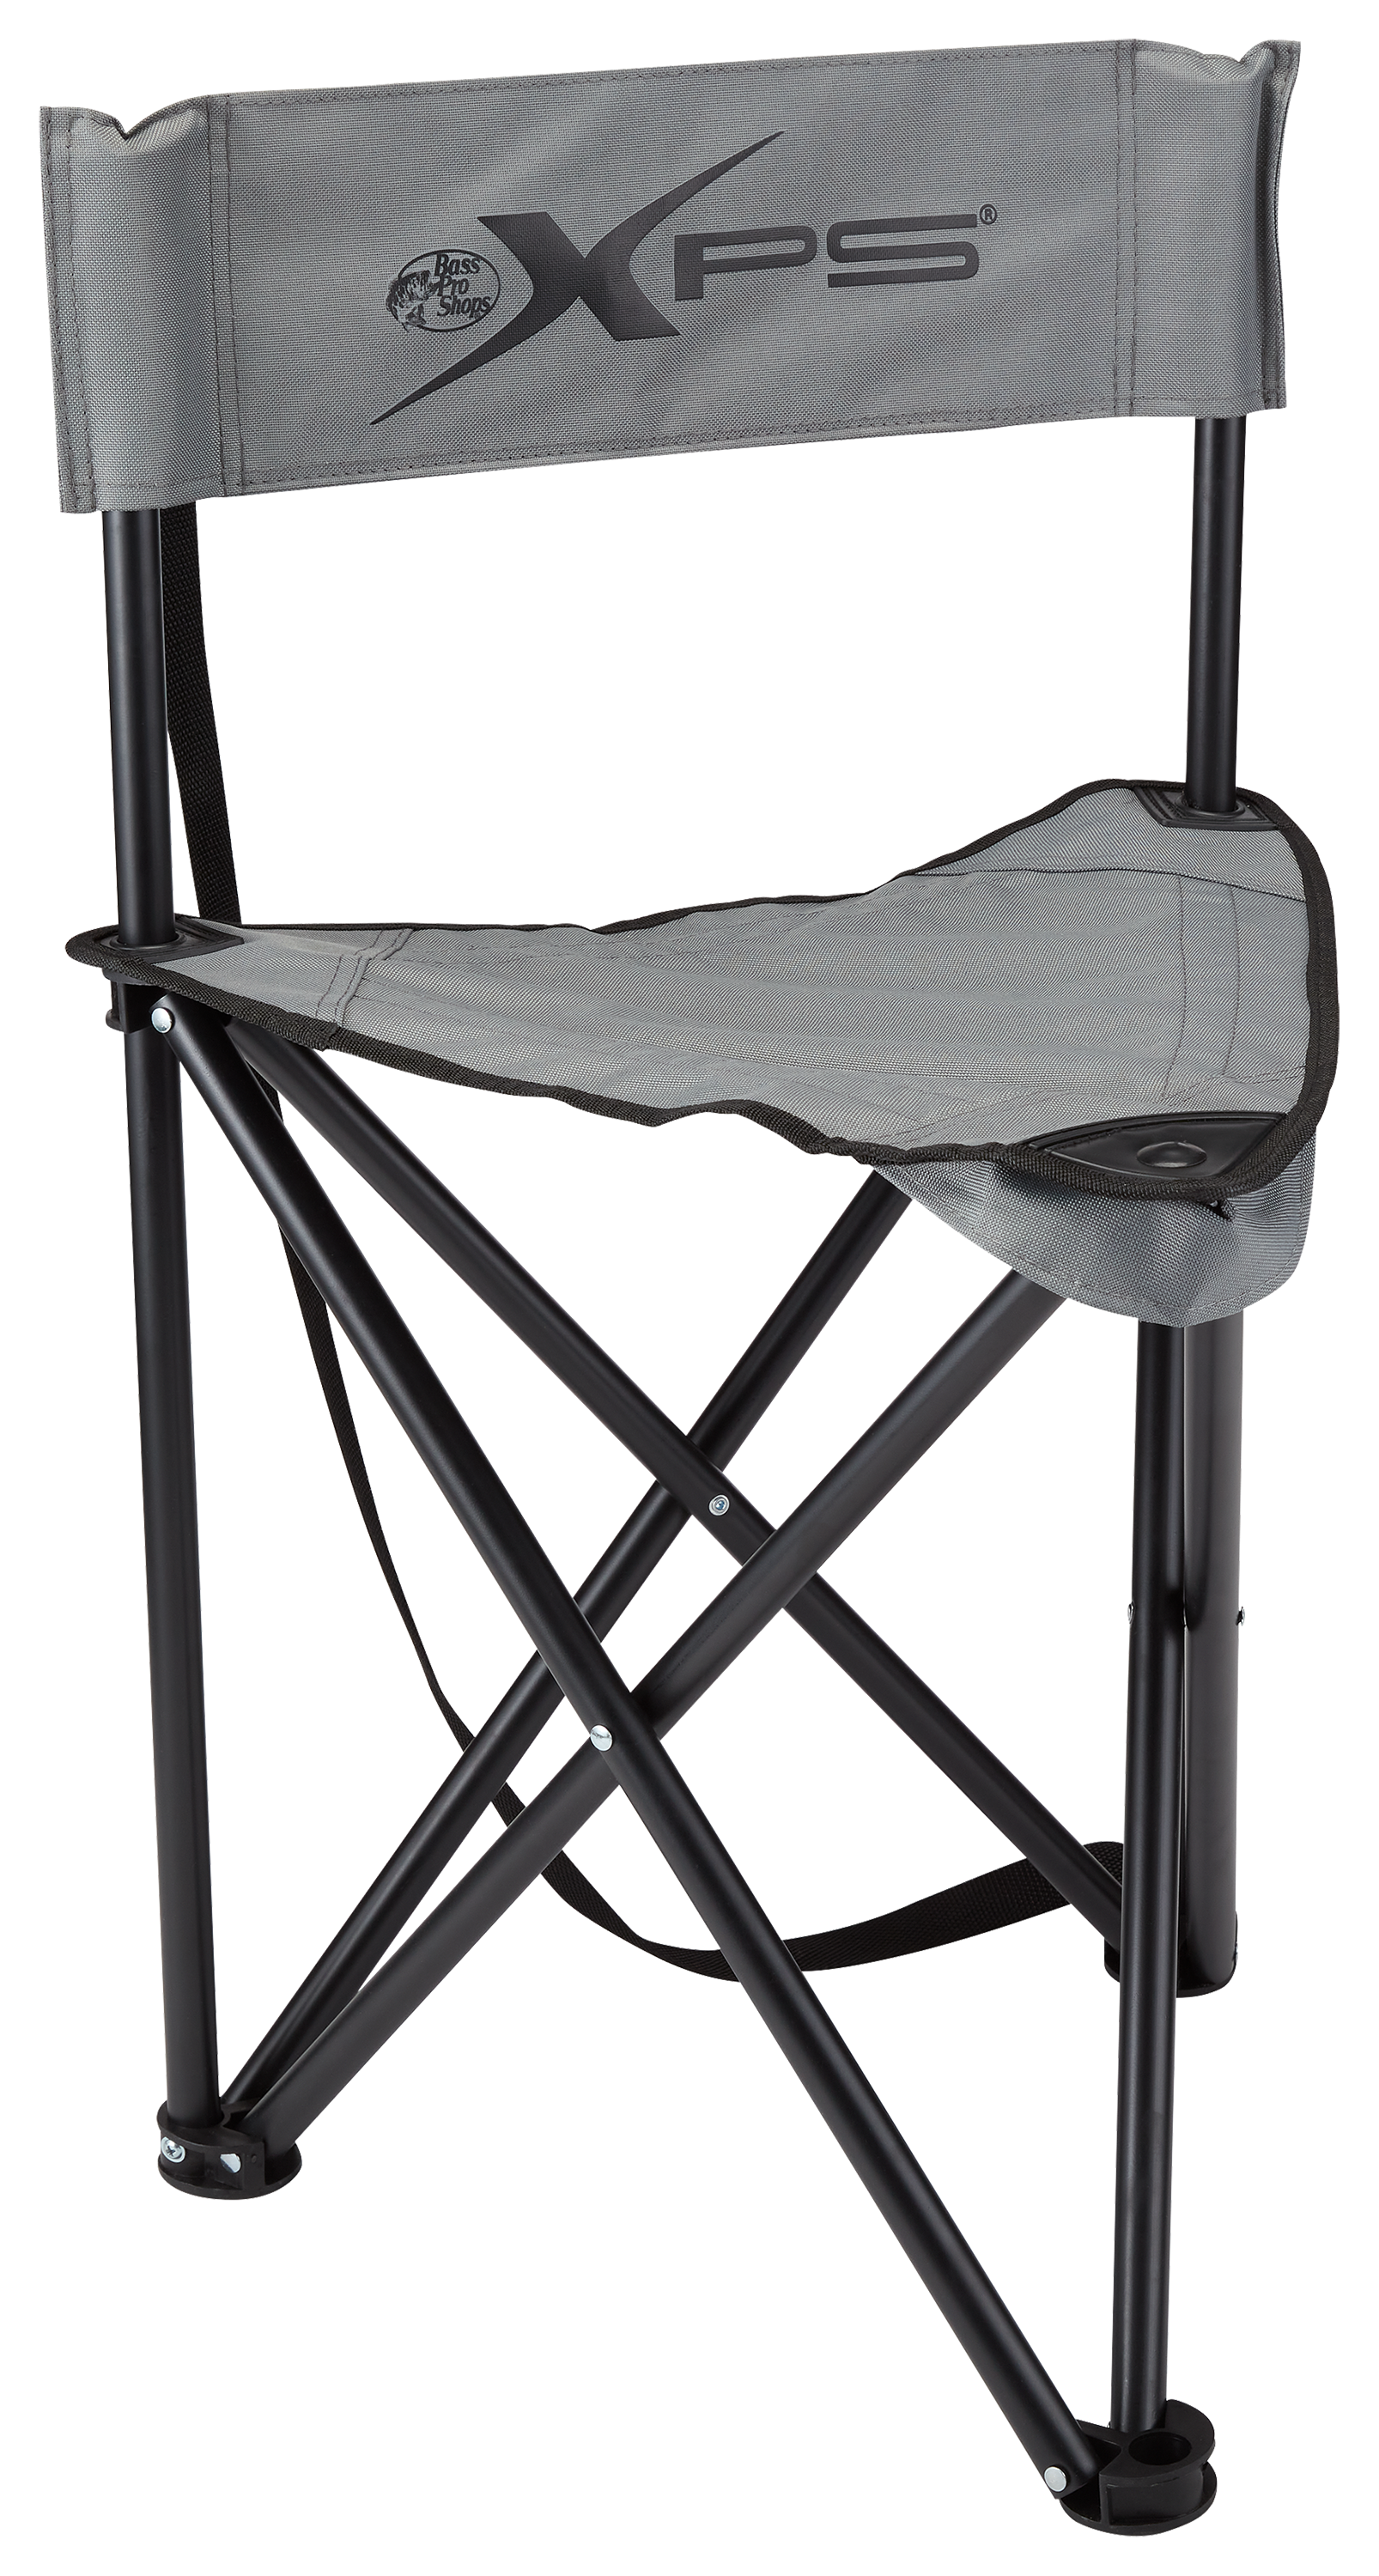 Bass Pro Shops® XPS® 4-Legged Ice Fishing Chair